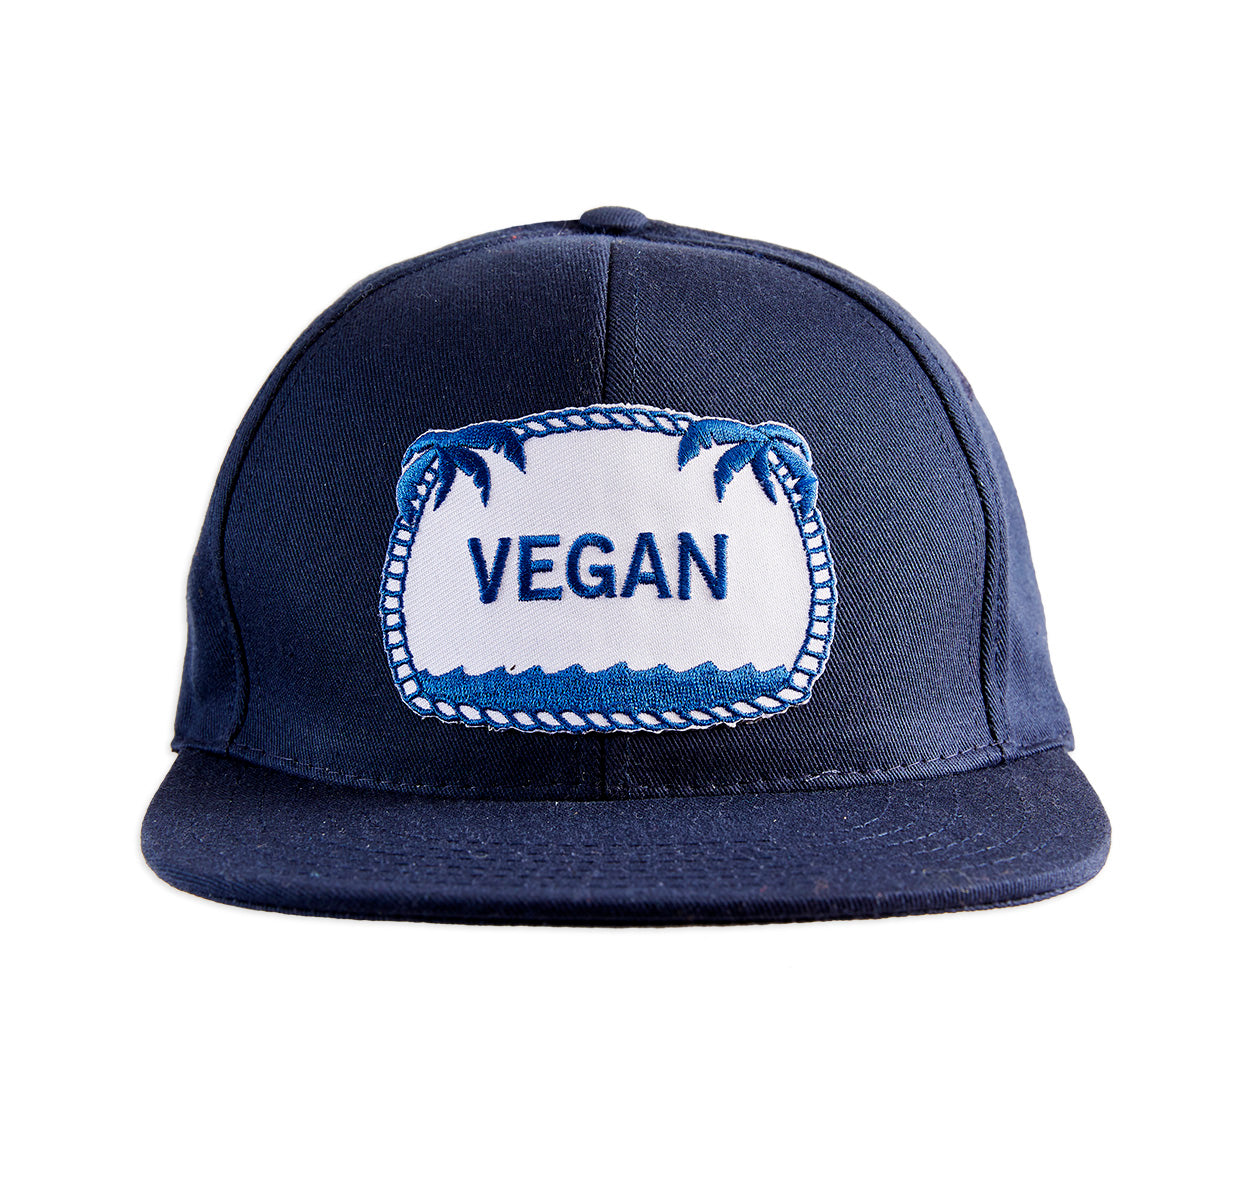 Vegan ball cap